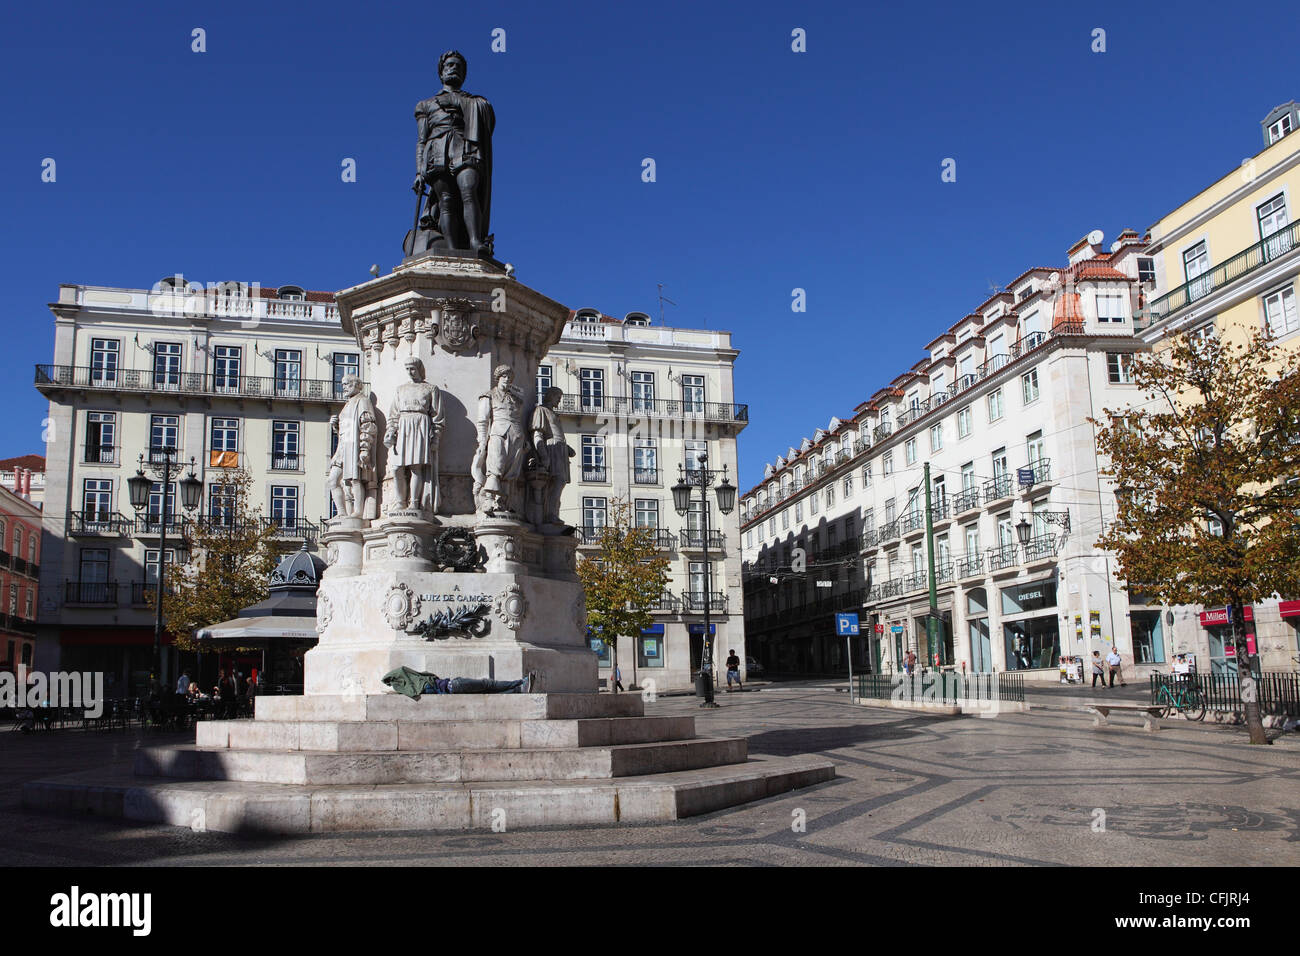 Largo de Camoes square, with the Luiz de Camoes memorial, at Bairro Alto, Lisbon, Portugal, Europe Stock Photo